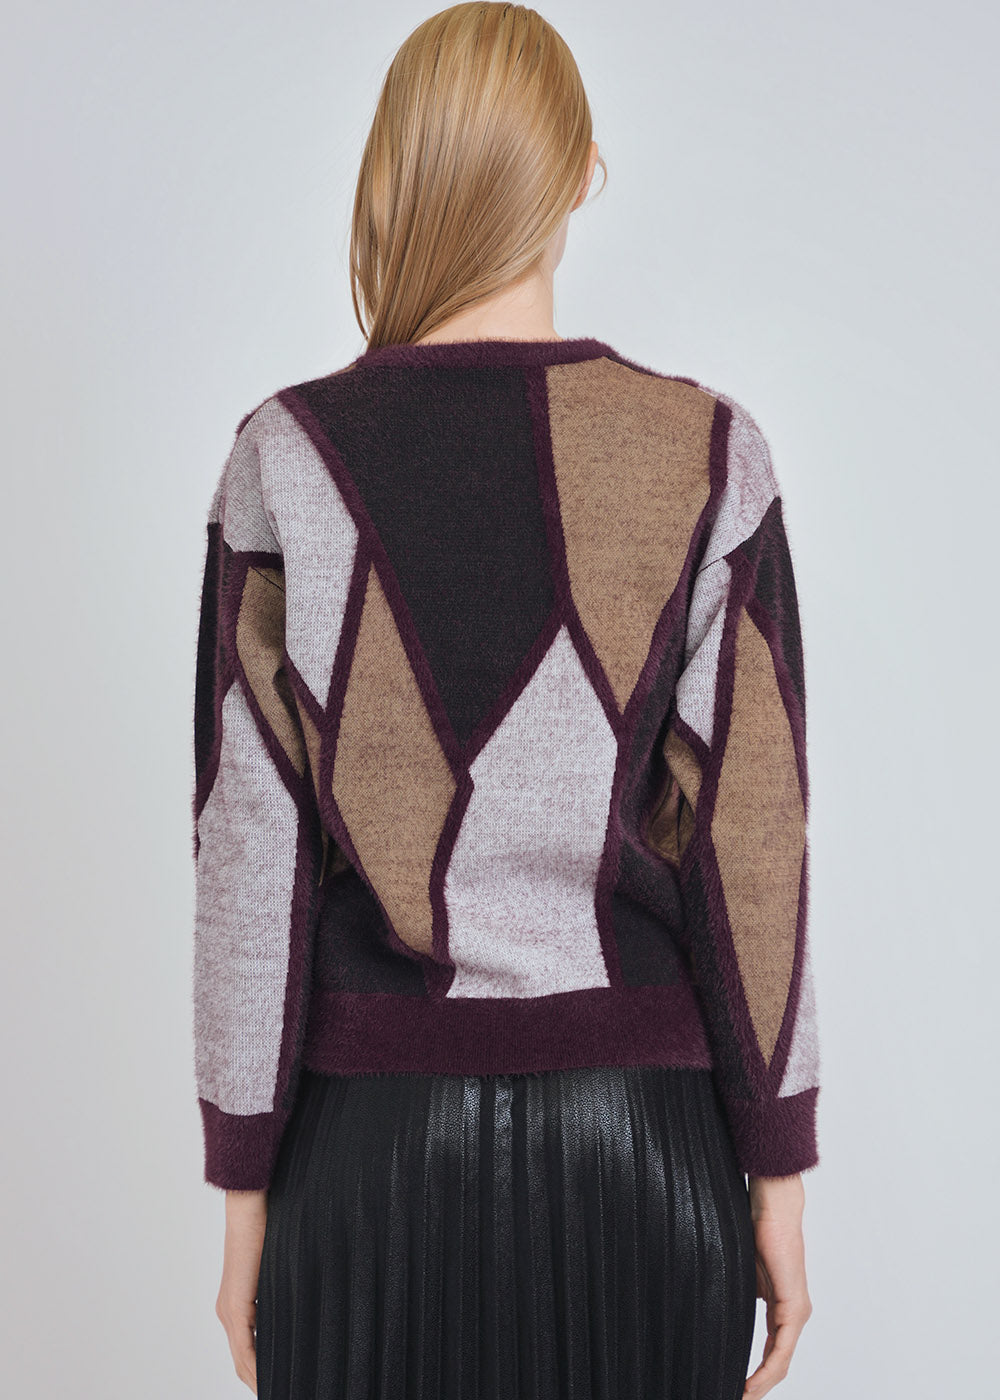 Mixed Hue Fuzzy Burgundy Sweater